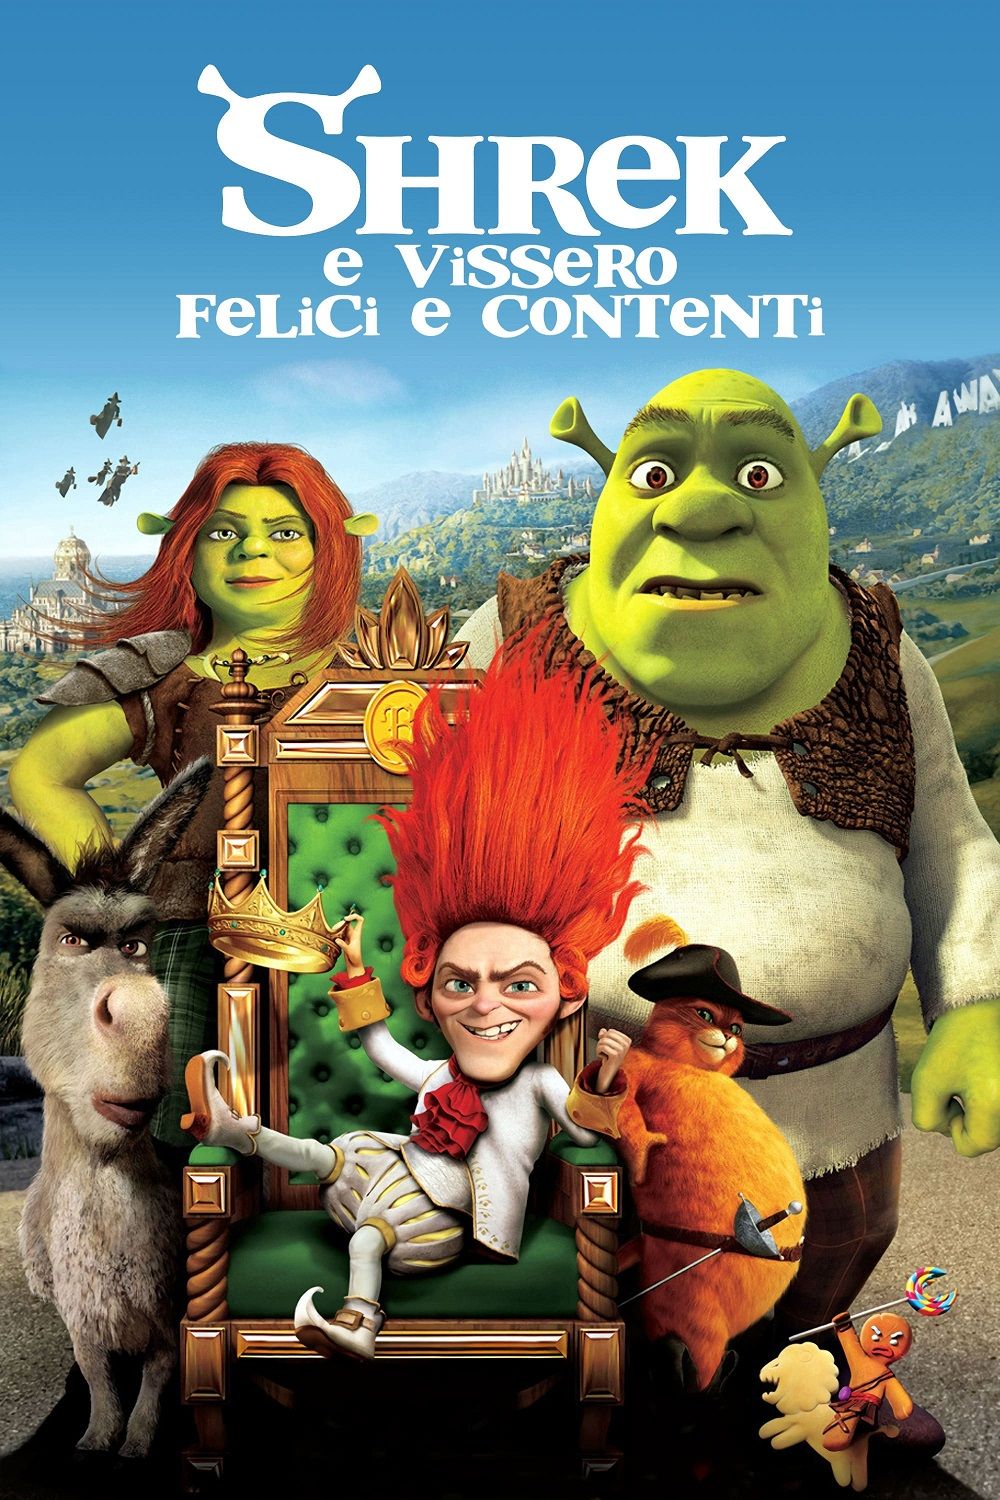 Copertina Film Shrek 4: vissero felici e contenti Streaming FULL HD 